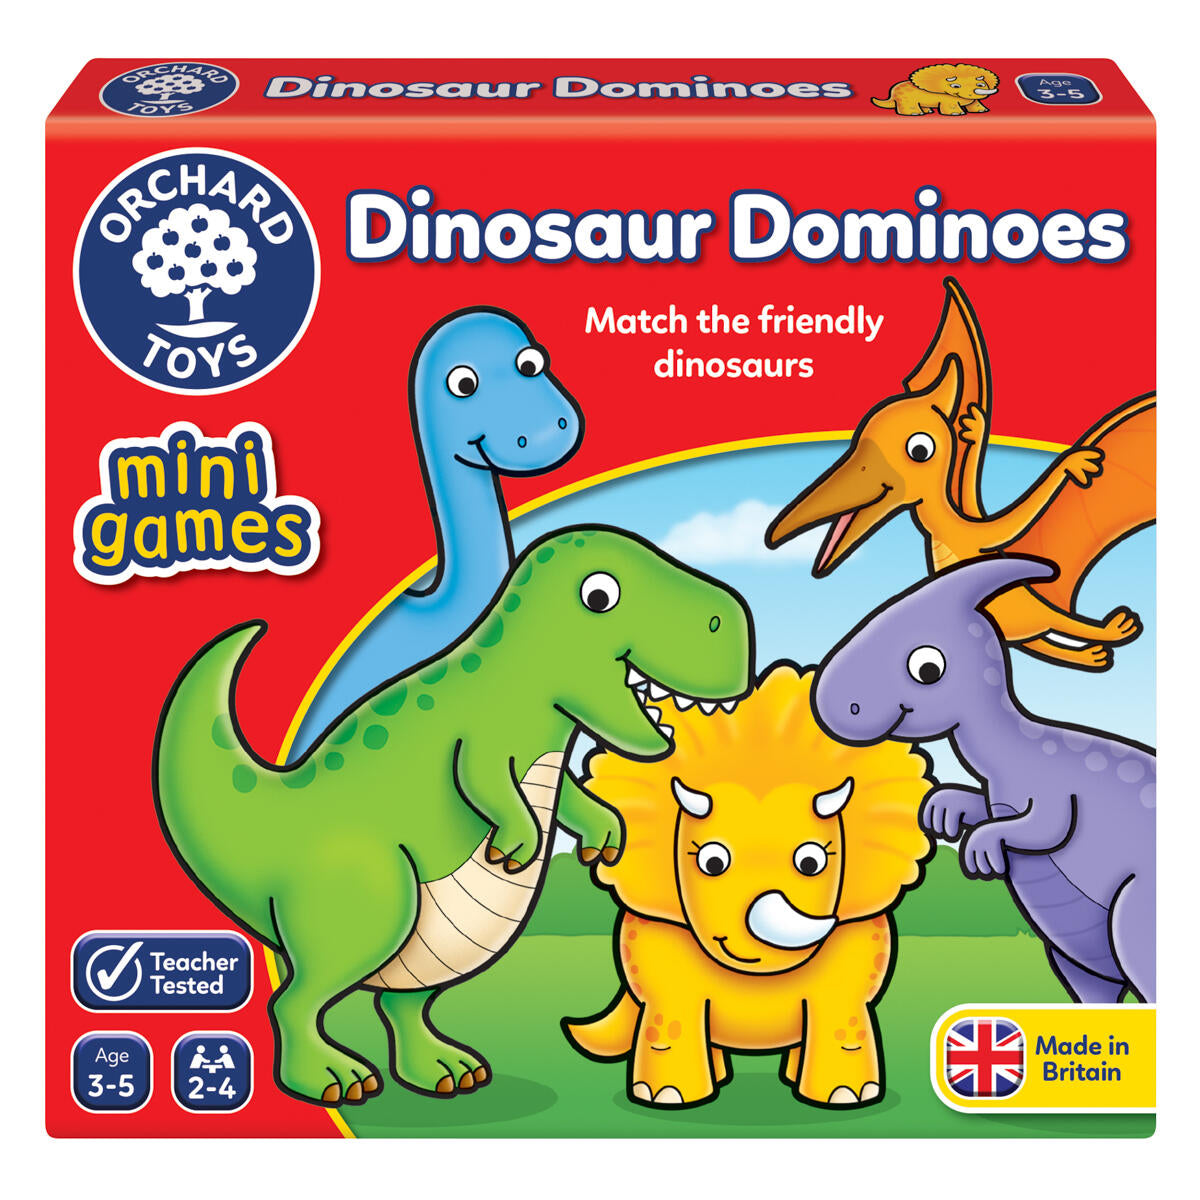  orchard toys dinosaur dominoes mini game